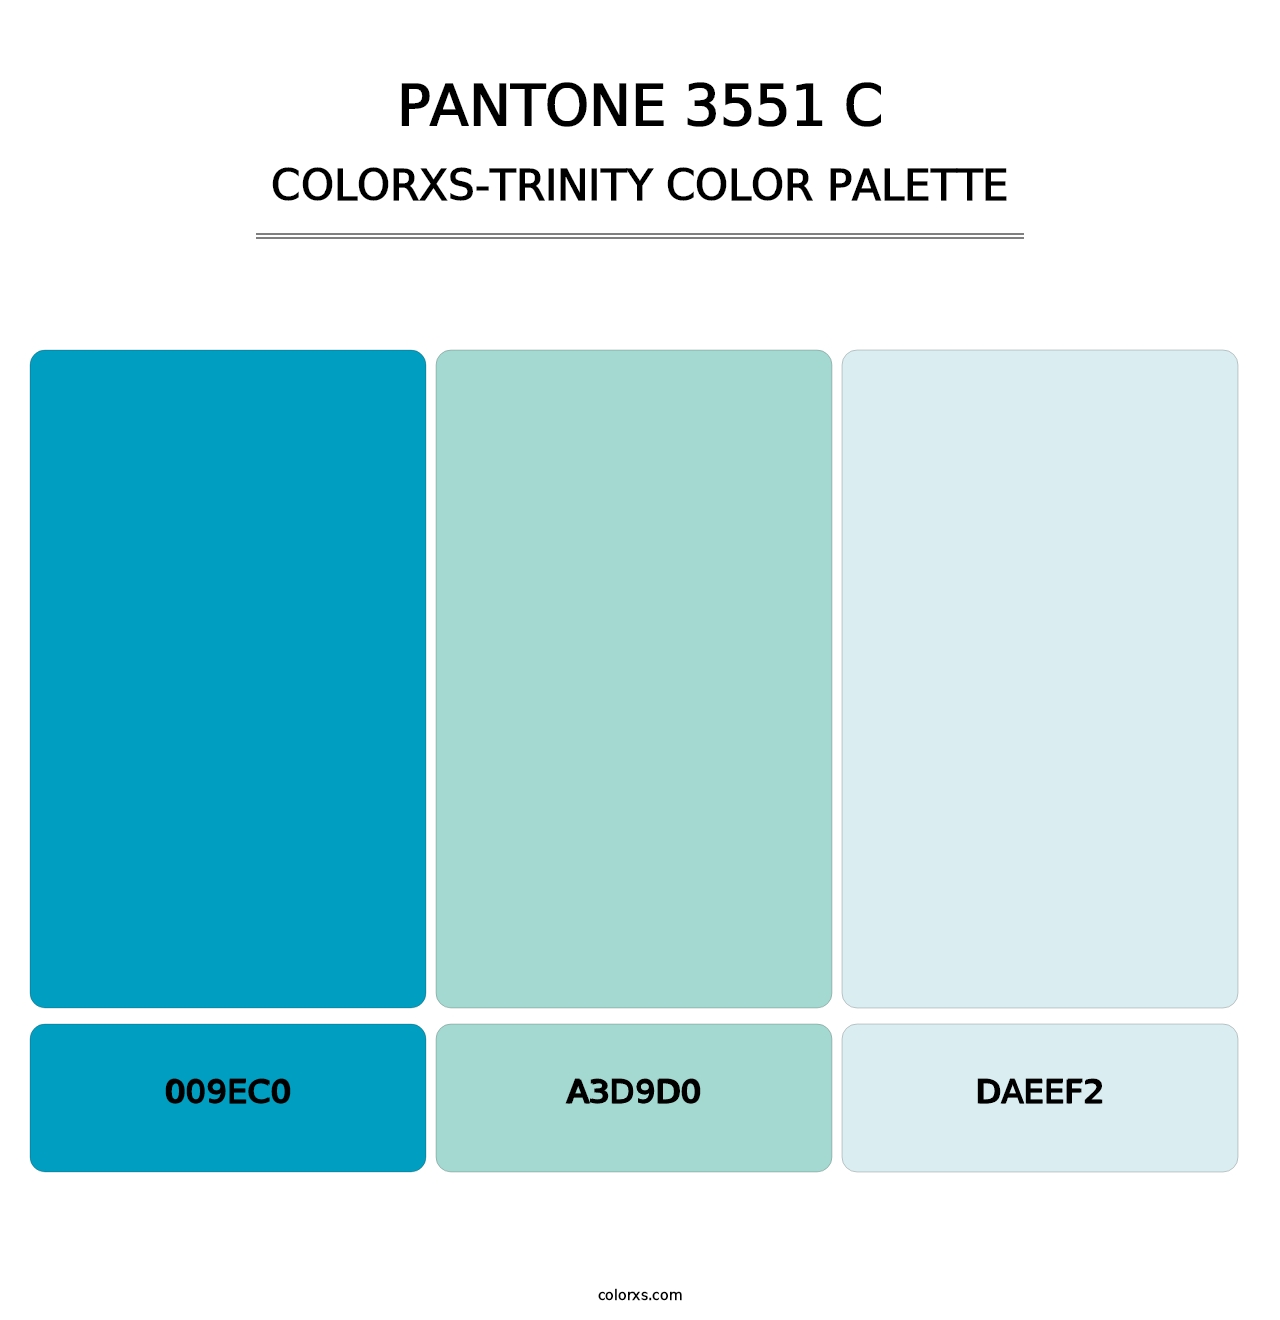 PANTONE 3551 C - Colorxs Trinity Palette